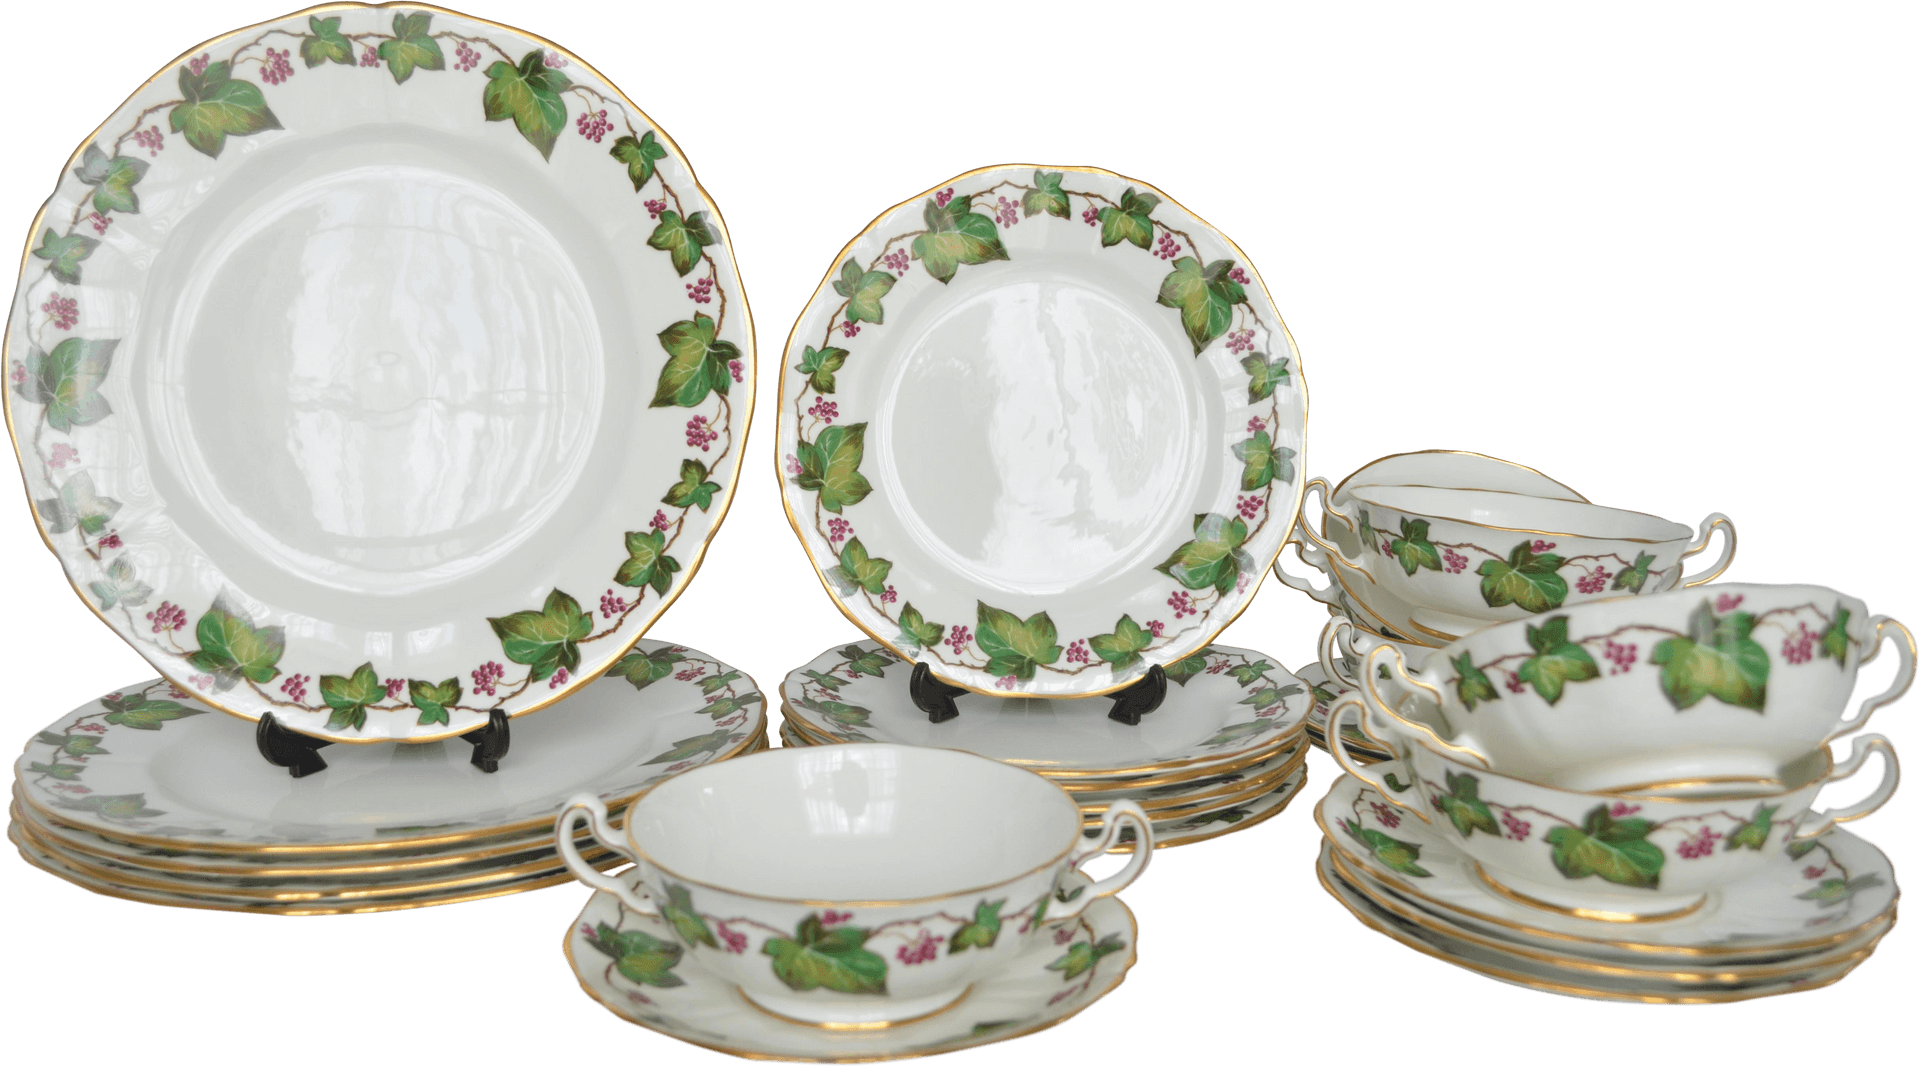 Elegant Floral Dinnerware Set PNG image